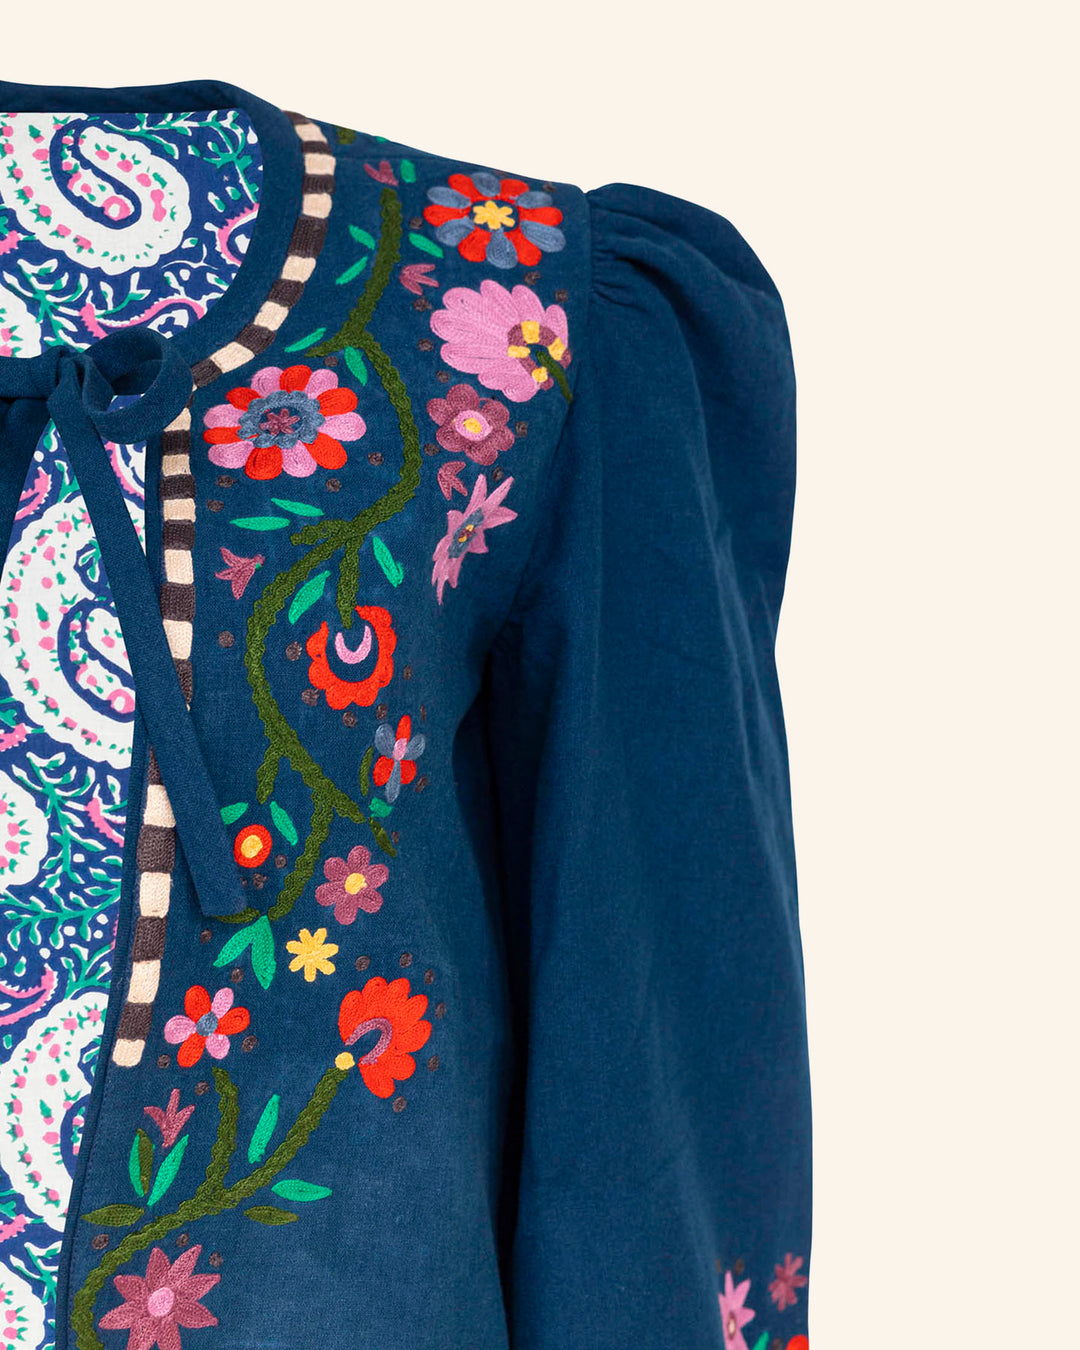 Fiorella Lapis Embroidered Jacket